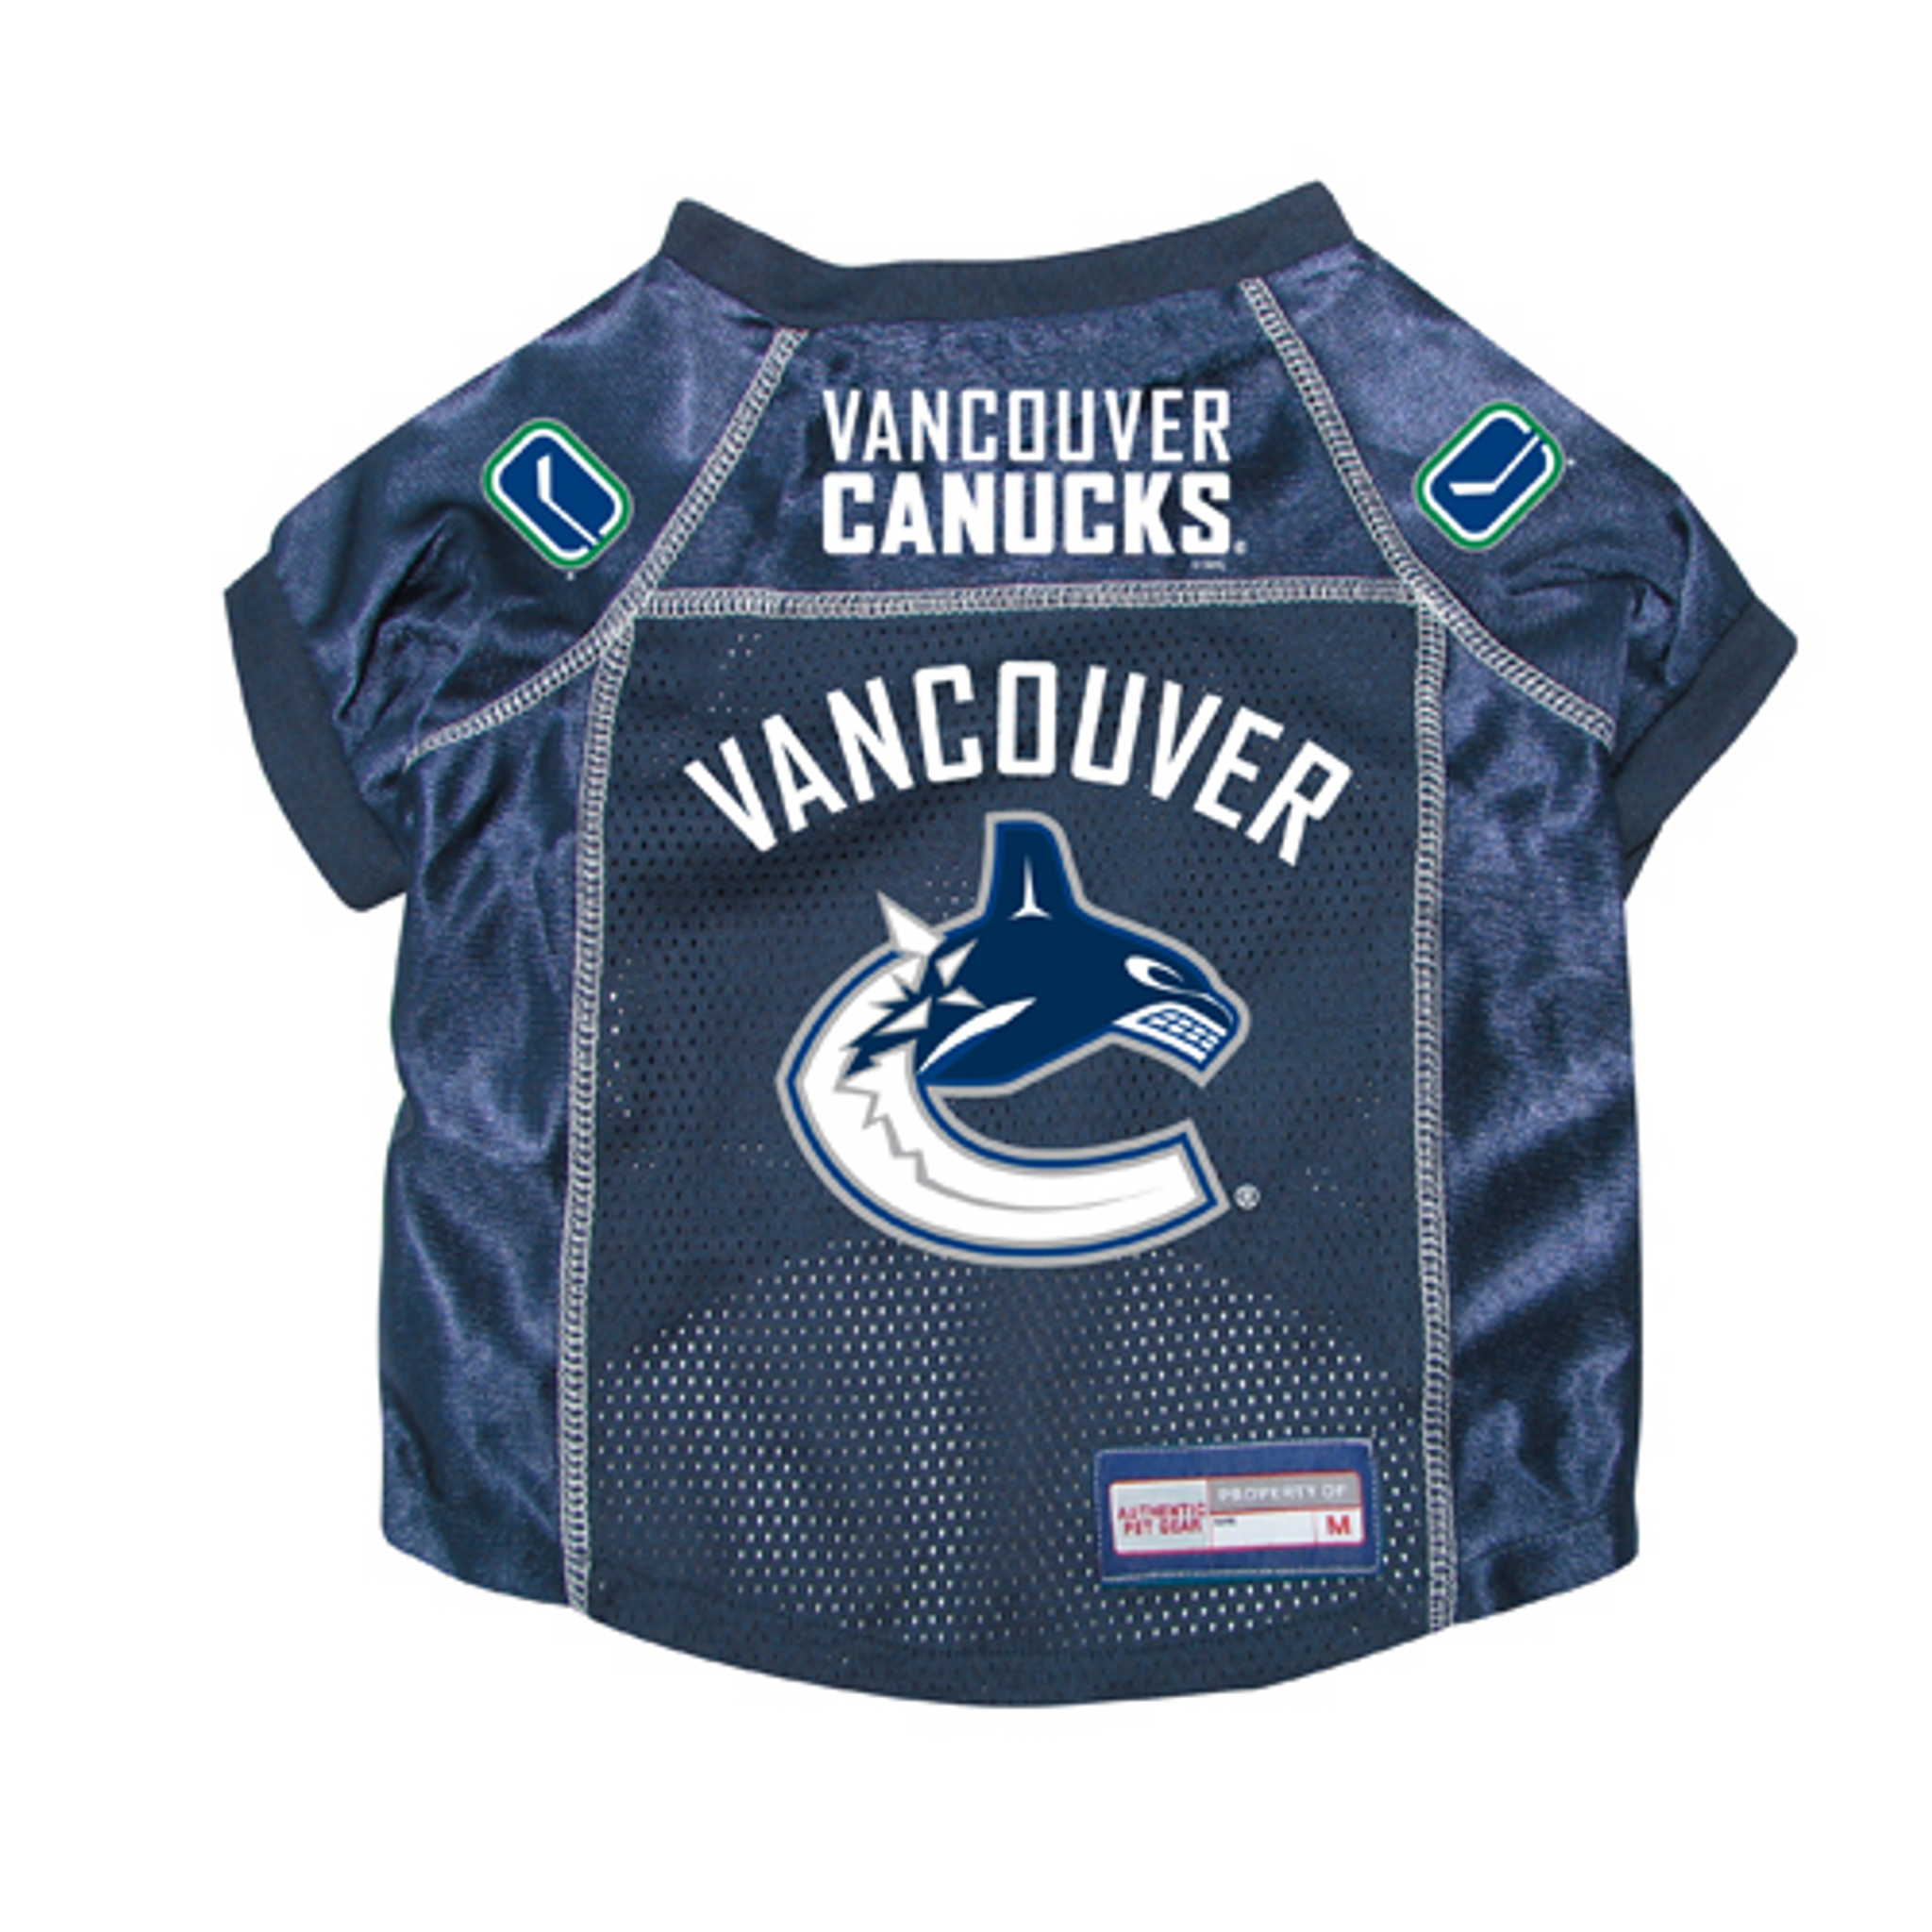 Dog jersey, Patch design, Vancouver canucks